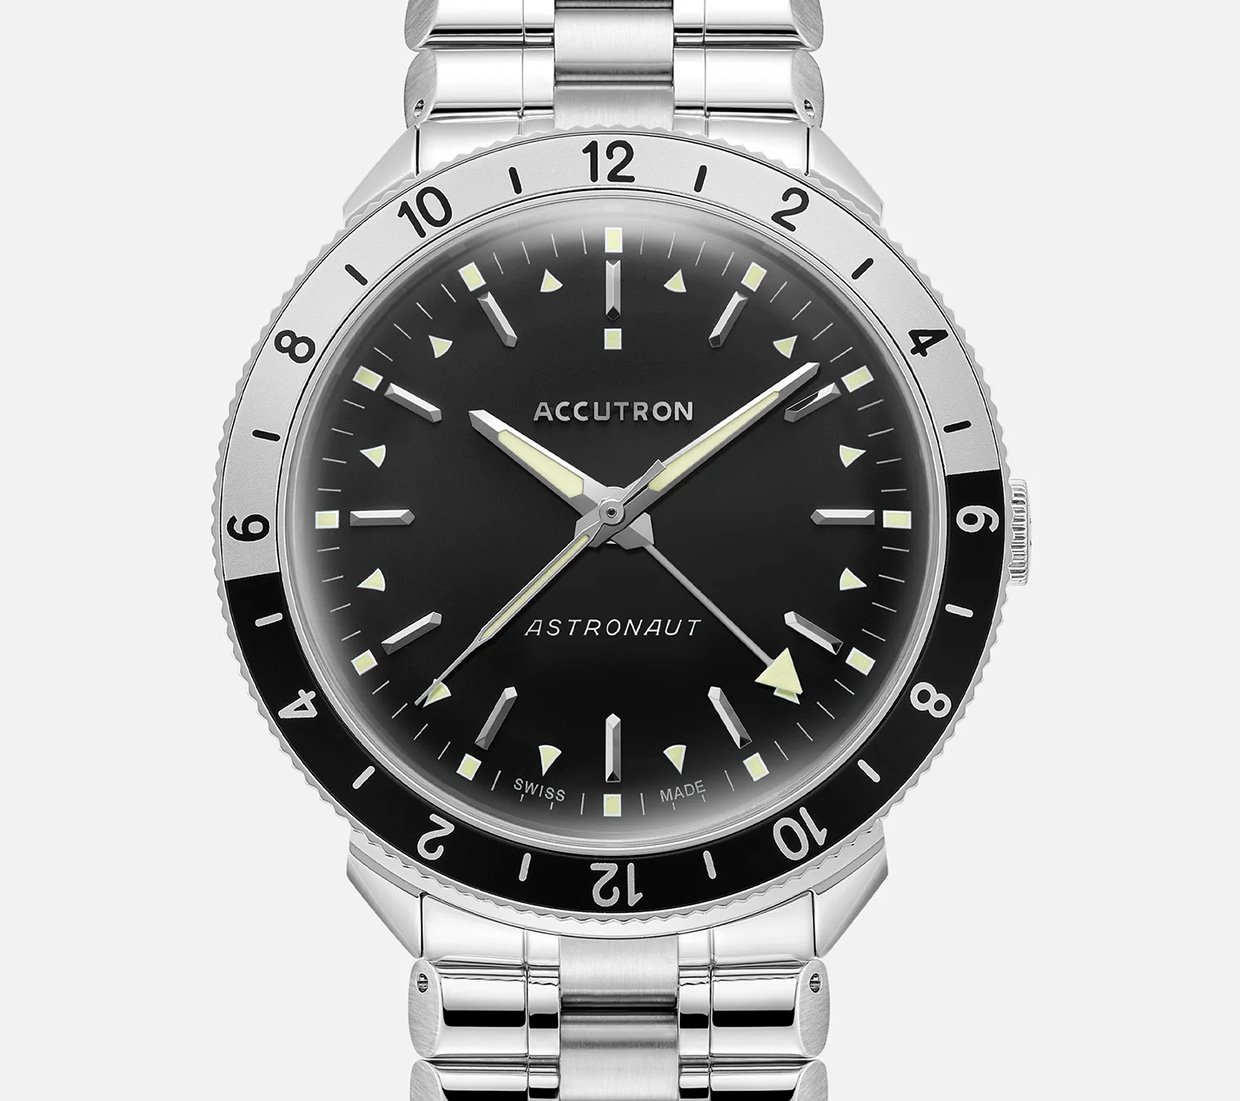 Accutron Astronaut Automatic Watch